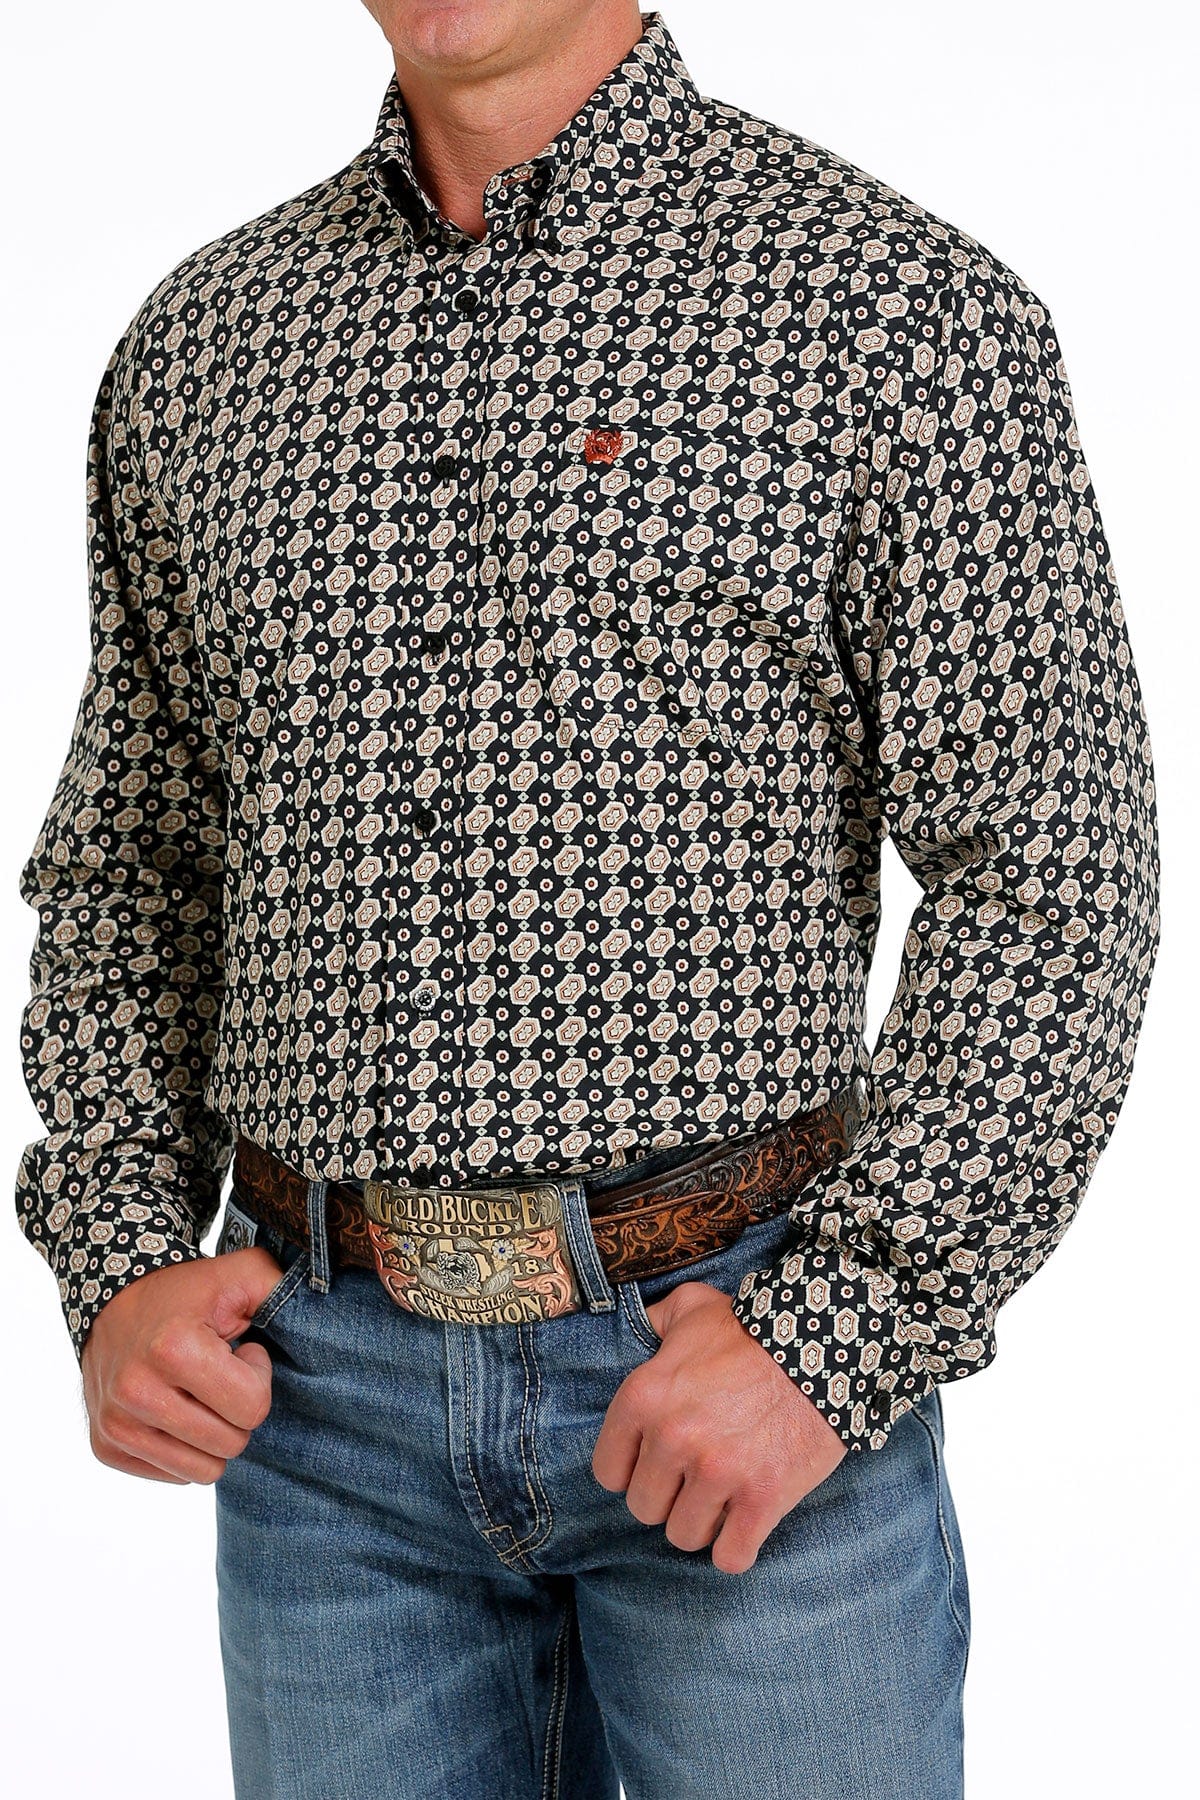 Cinch Men's Black Modern Fit Long Sleeve Button Down Western Shirt MTW -  Russell's Western Wear, Inc.